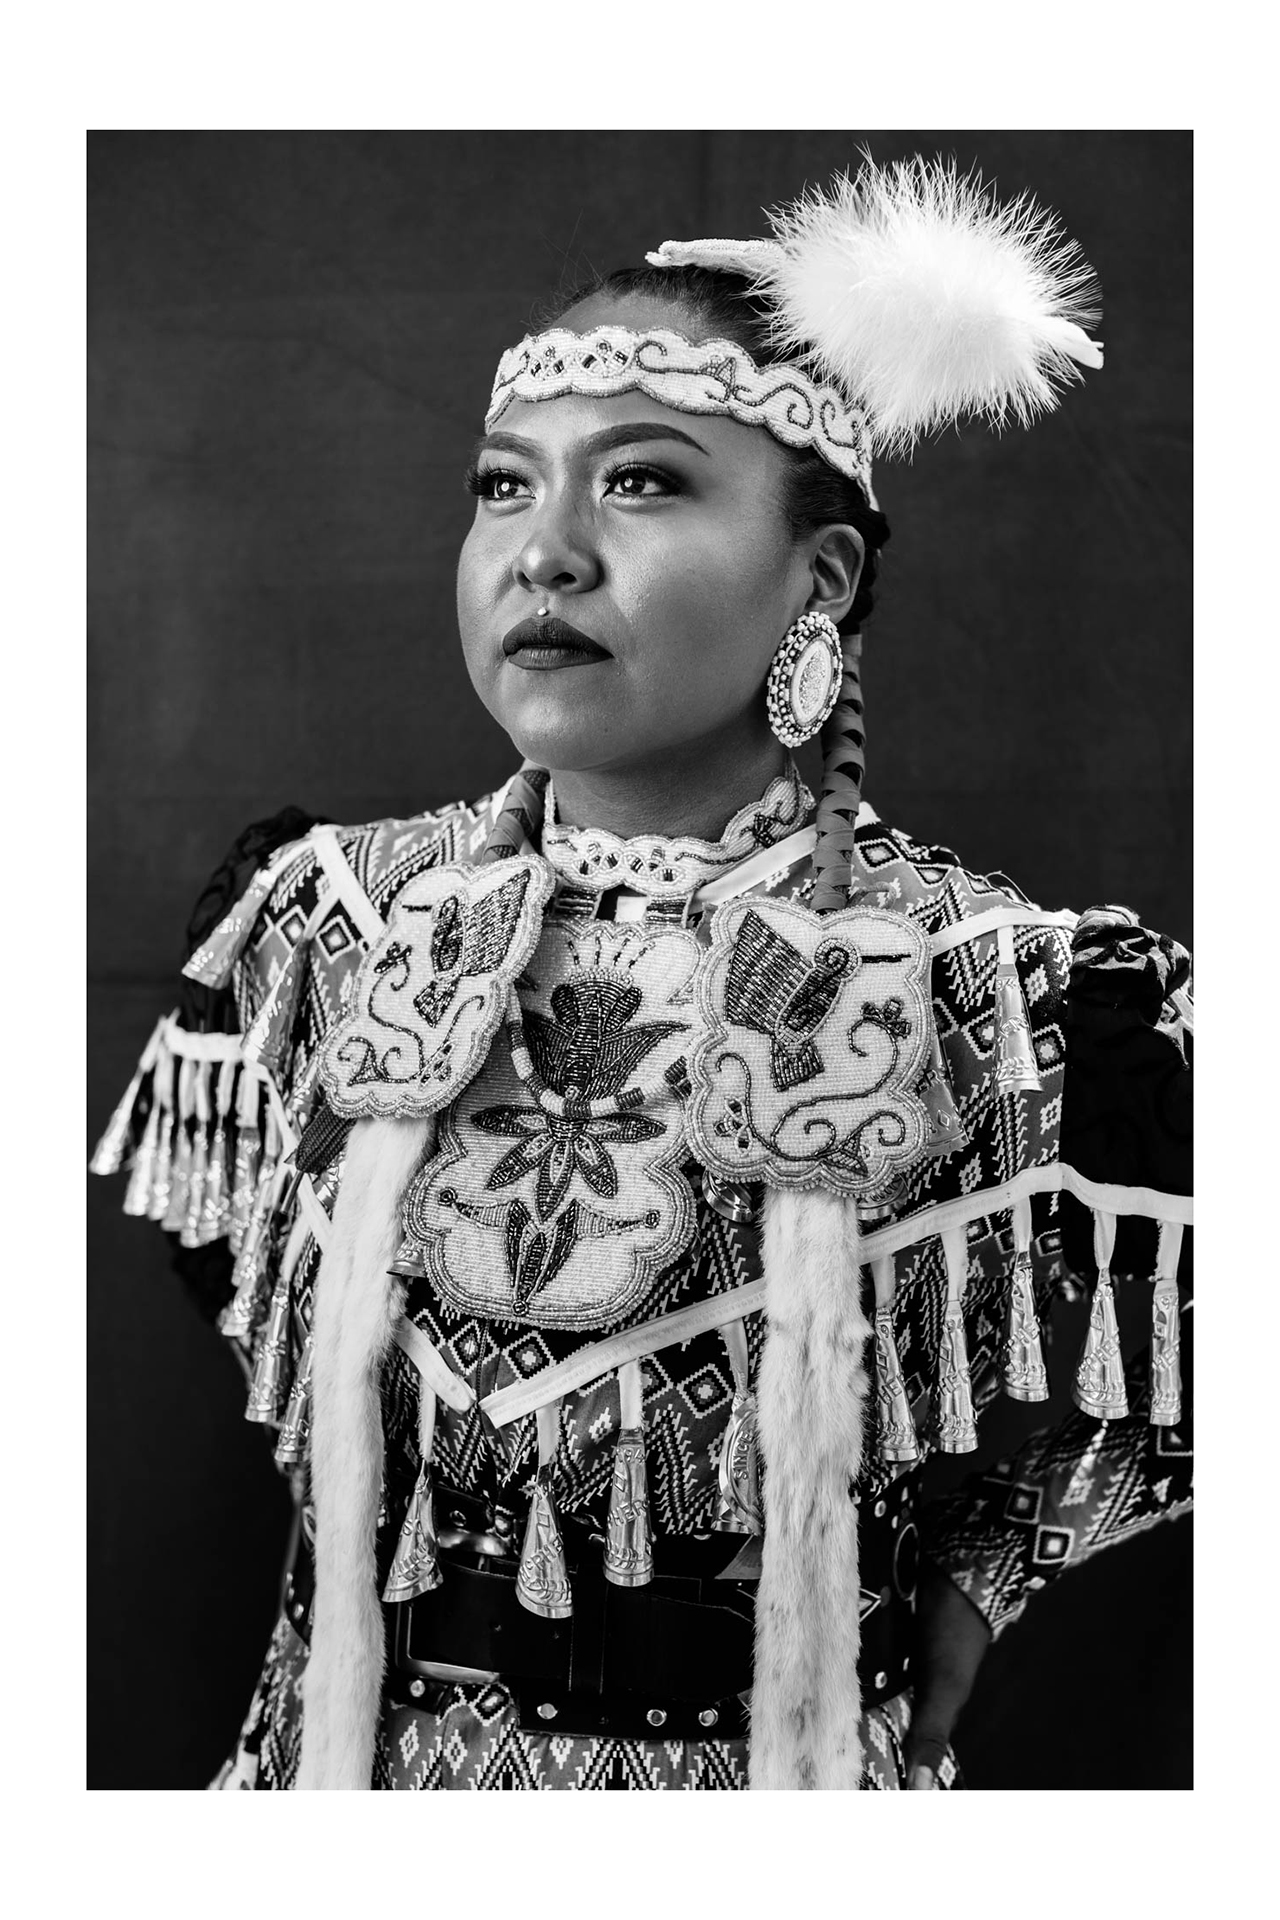 indian-jingle-dress-woman-black-and-white-portrait